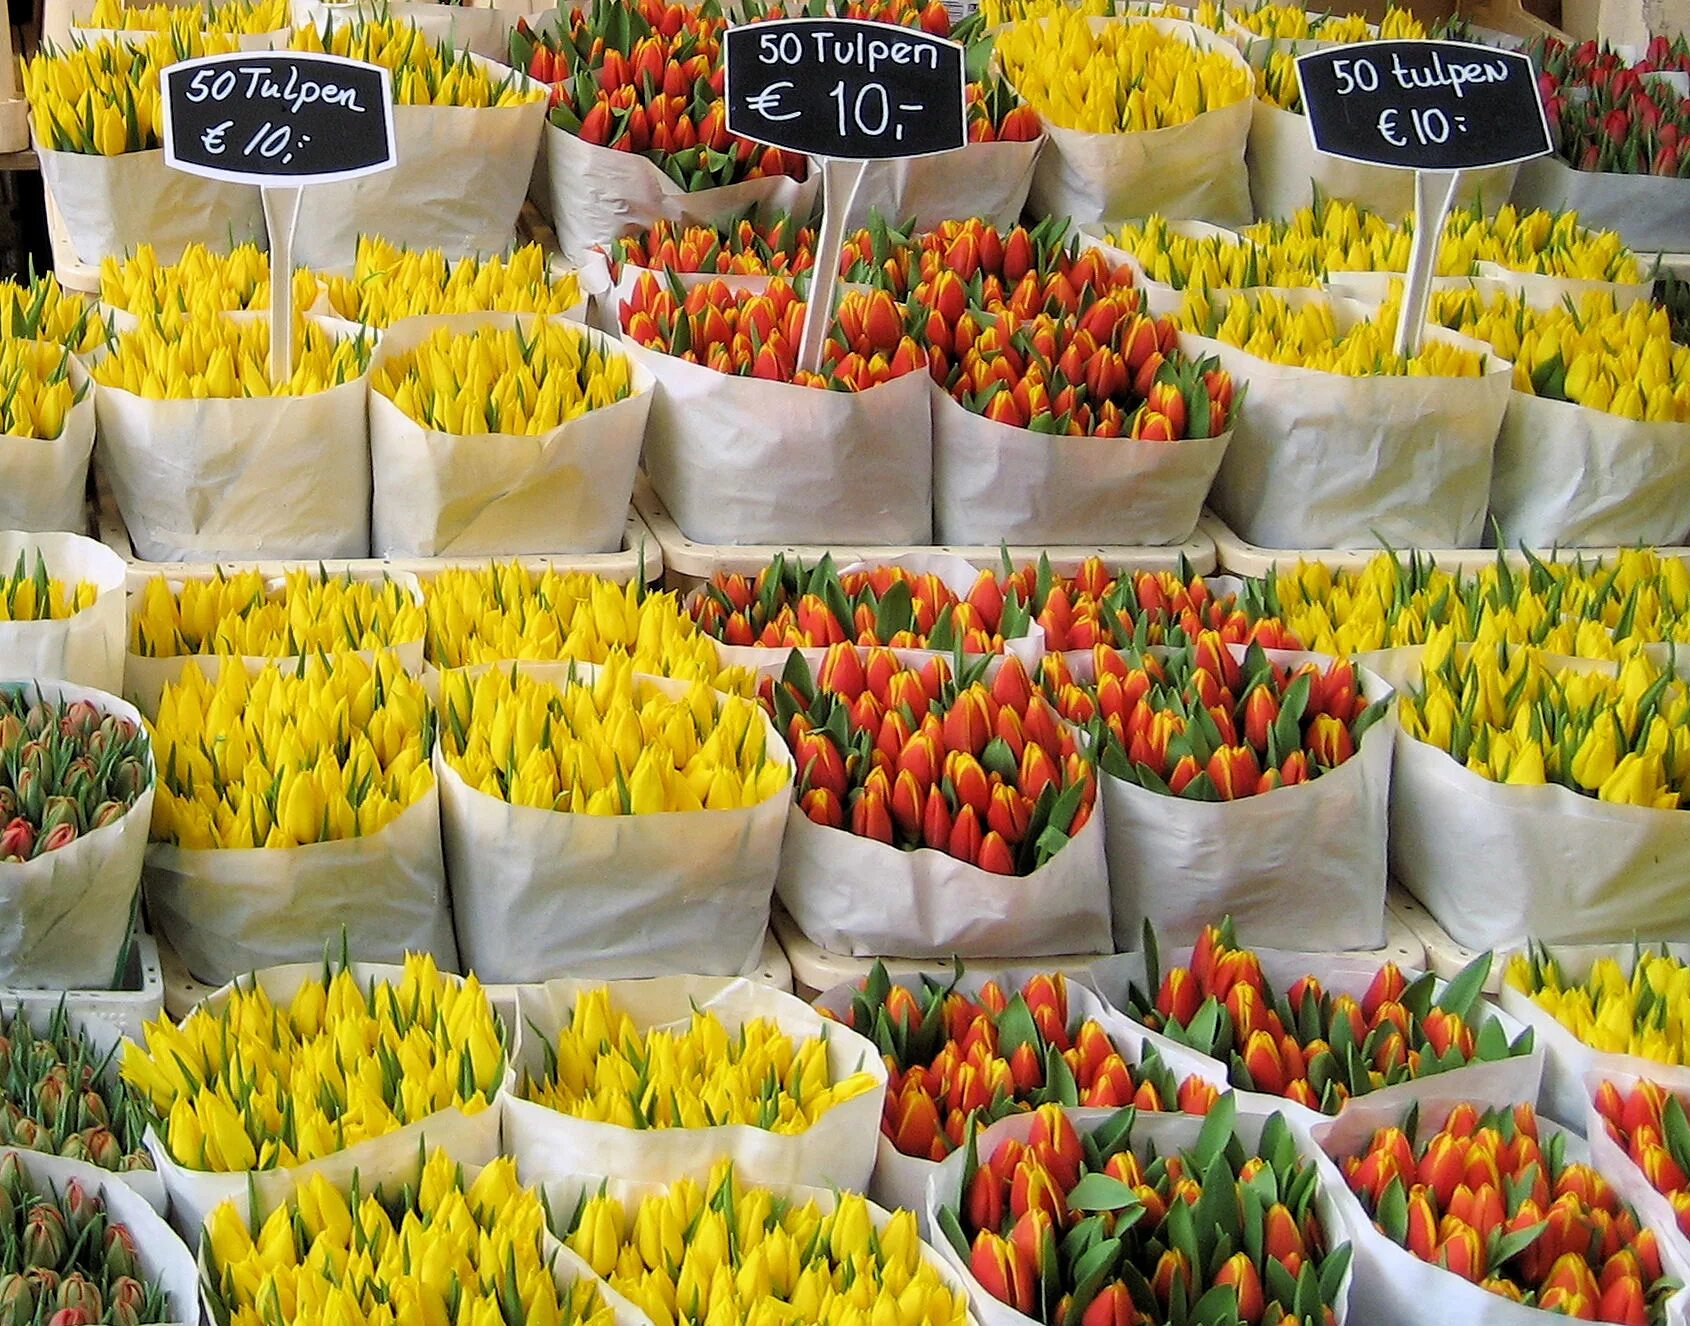 Рынок тюльпанов в Амстердаме. Bloemenmarkt в Амстердаме. Цветочный рынок Амстердам Нидерланды. Flower Market in Amsterdam (Bloemenmarkt).